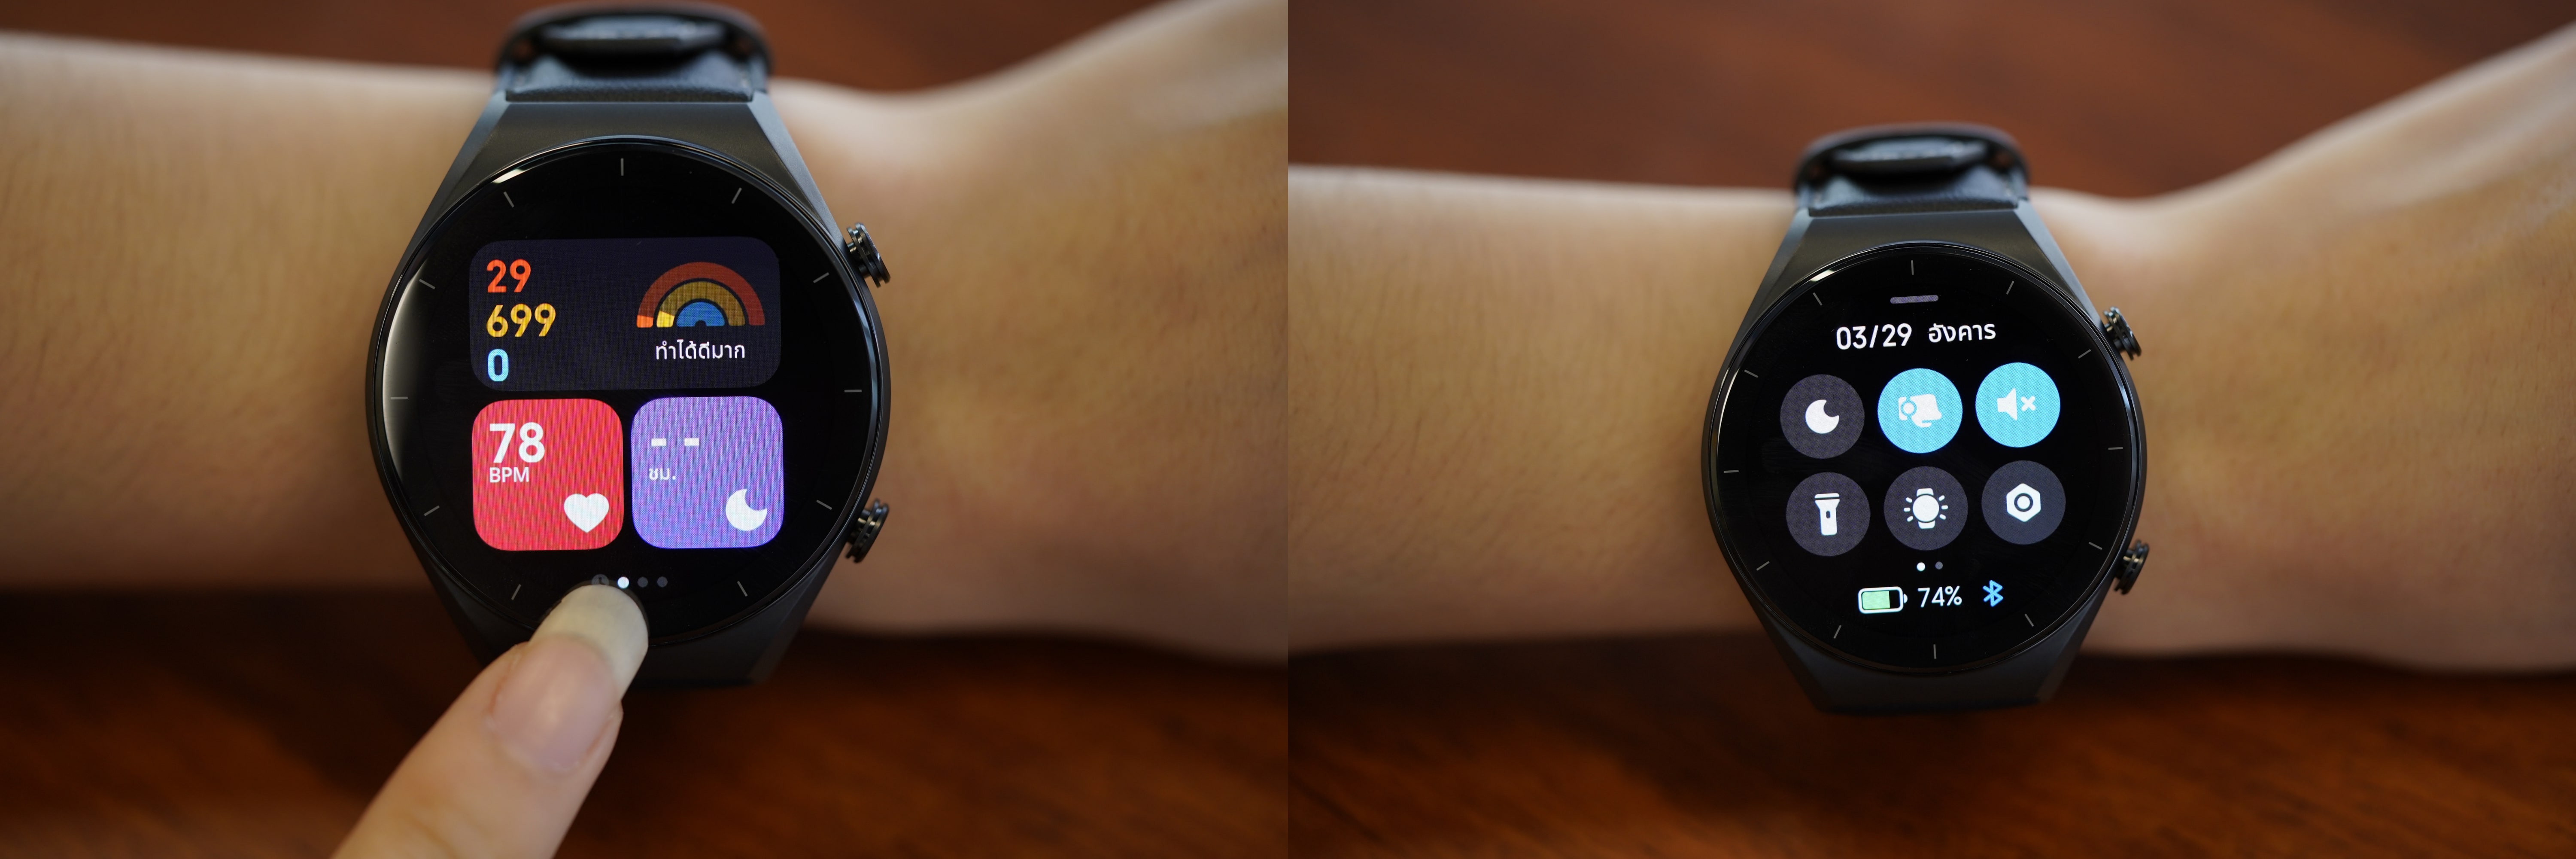 REVIEW Xiaomi Watch S1 รีวิว Xiaomi Watch S1 Active